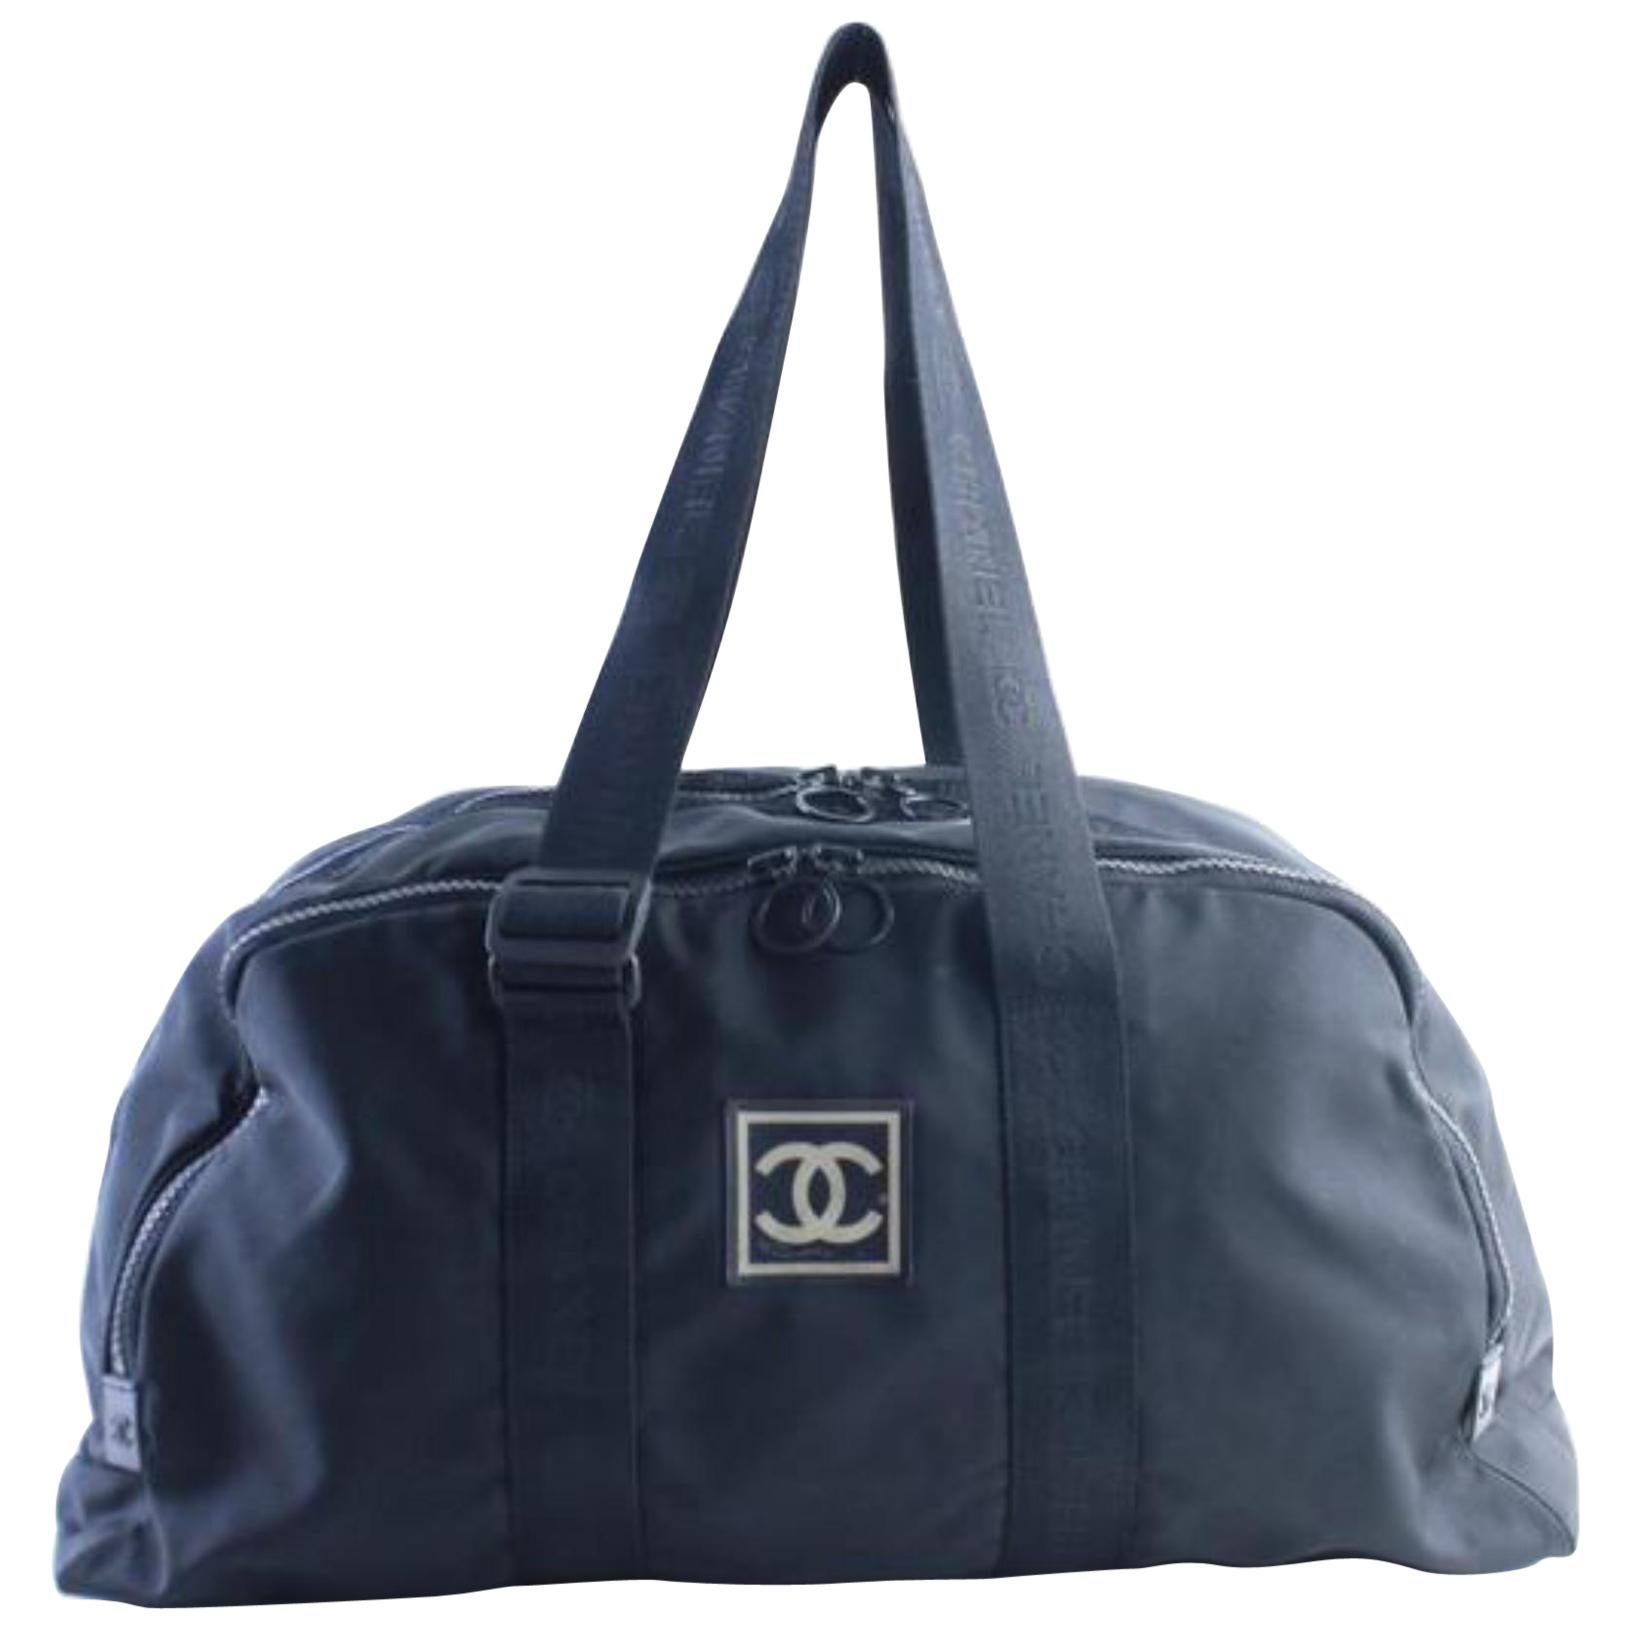 Chanel Duffle Cc Sports Boston 226424 Black Canvas Weekend/Travel Bag For Sale